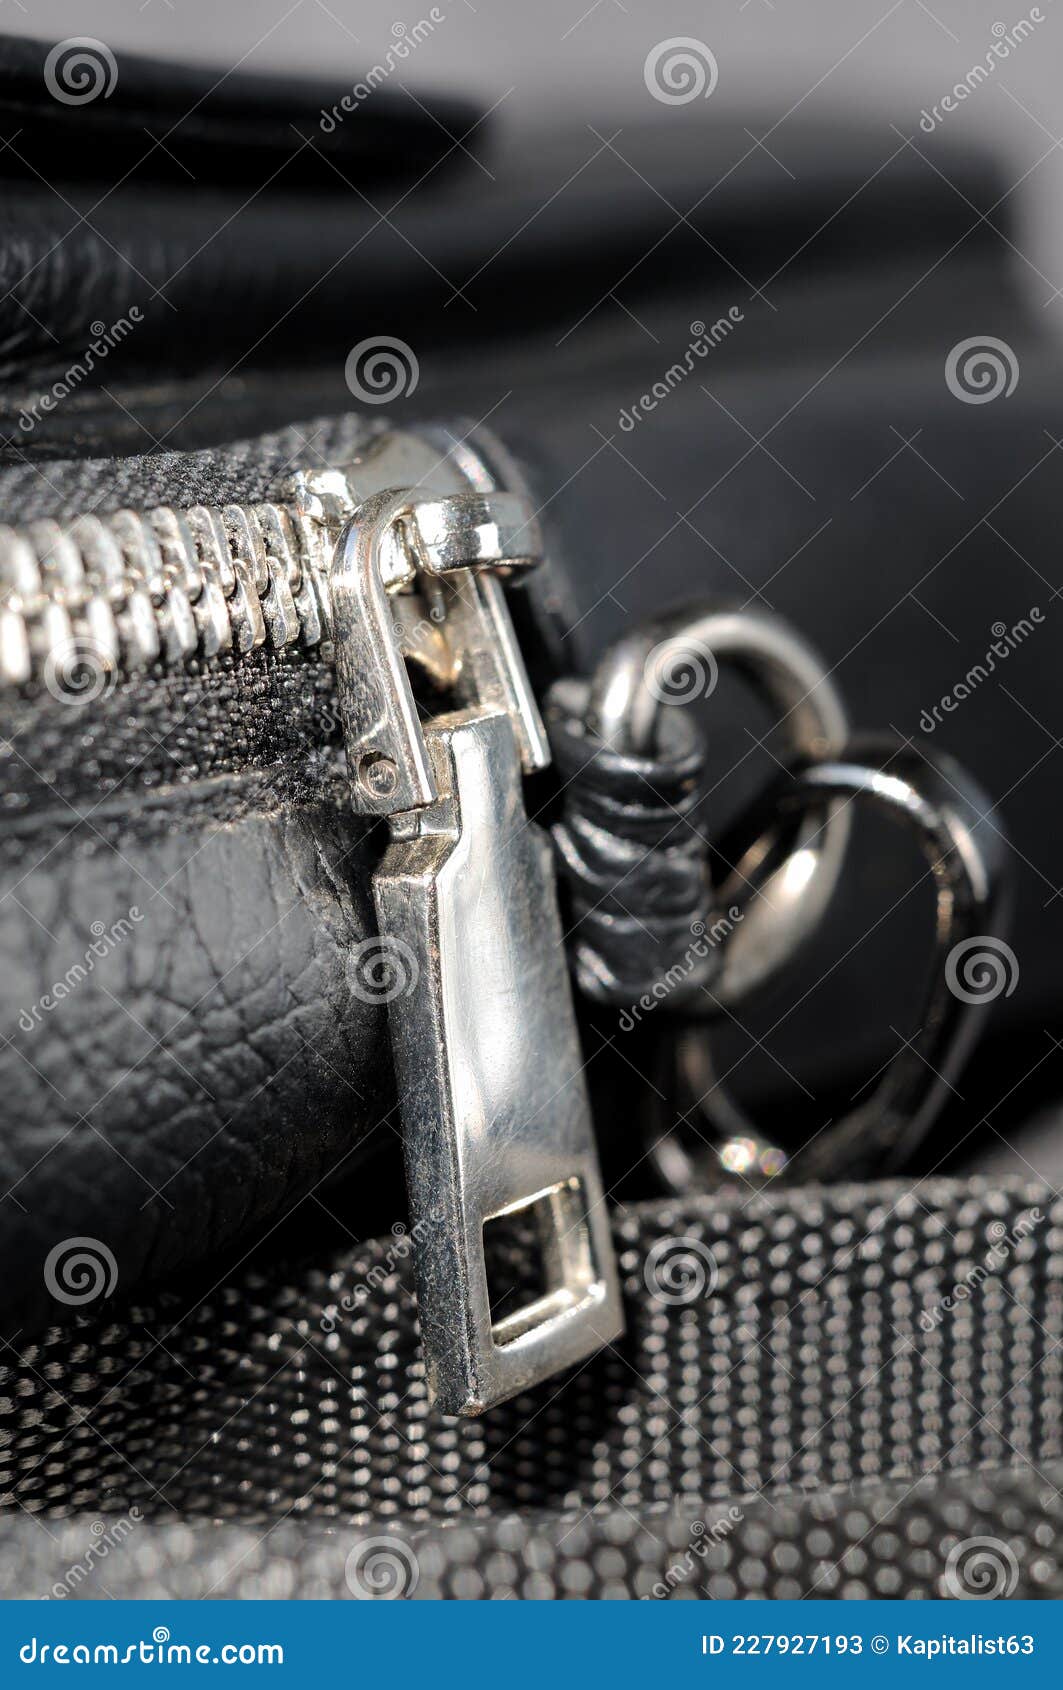 Zipper on a Leather Handbag. Shallow Depth of Field Stock Image - Image ...